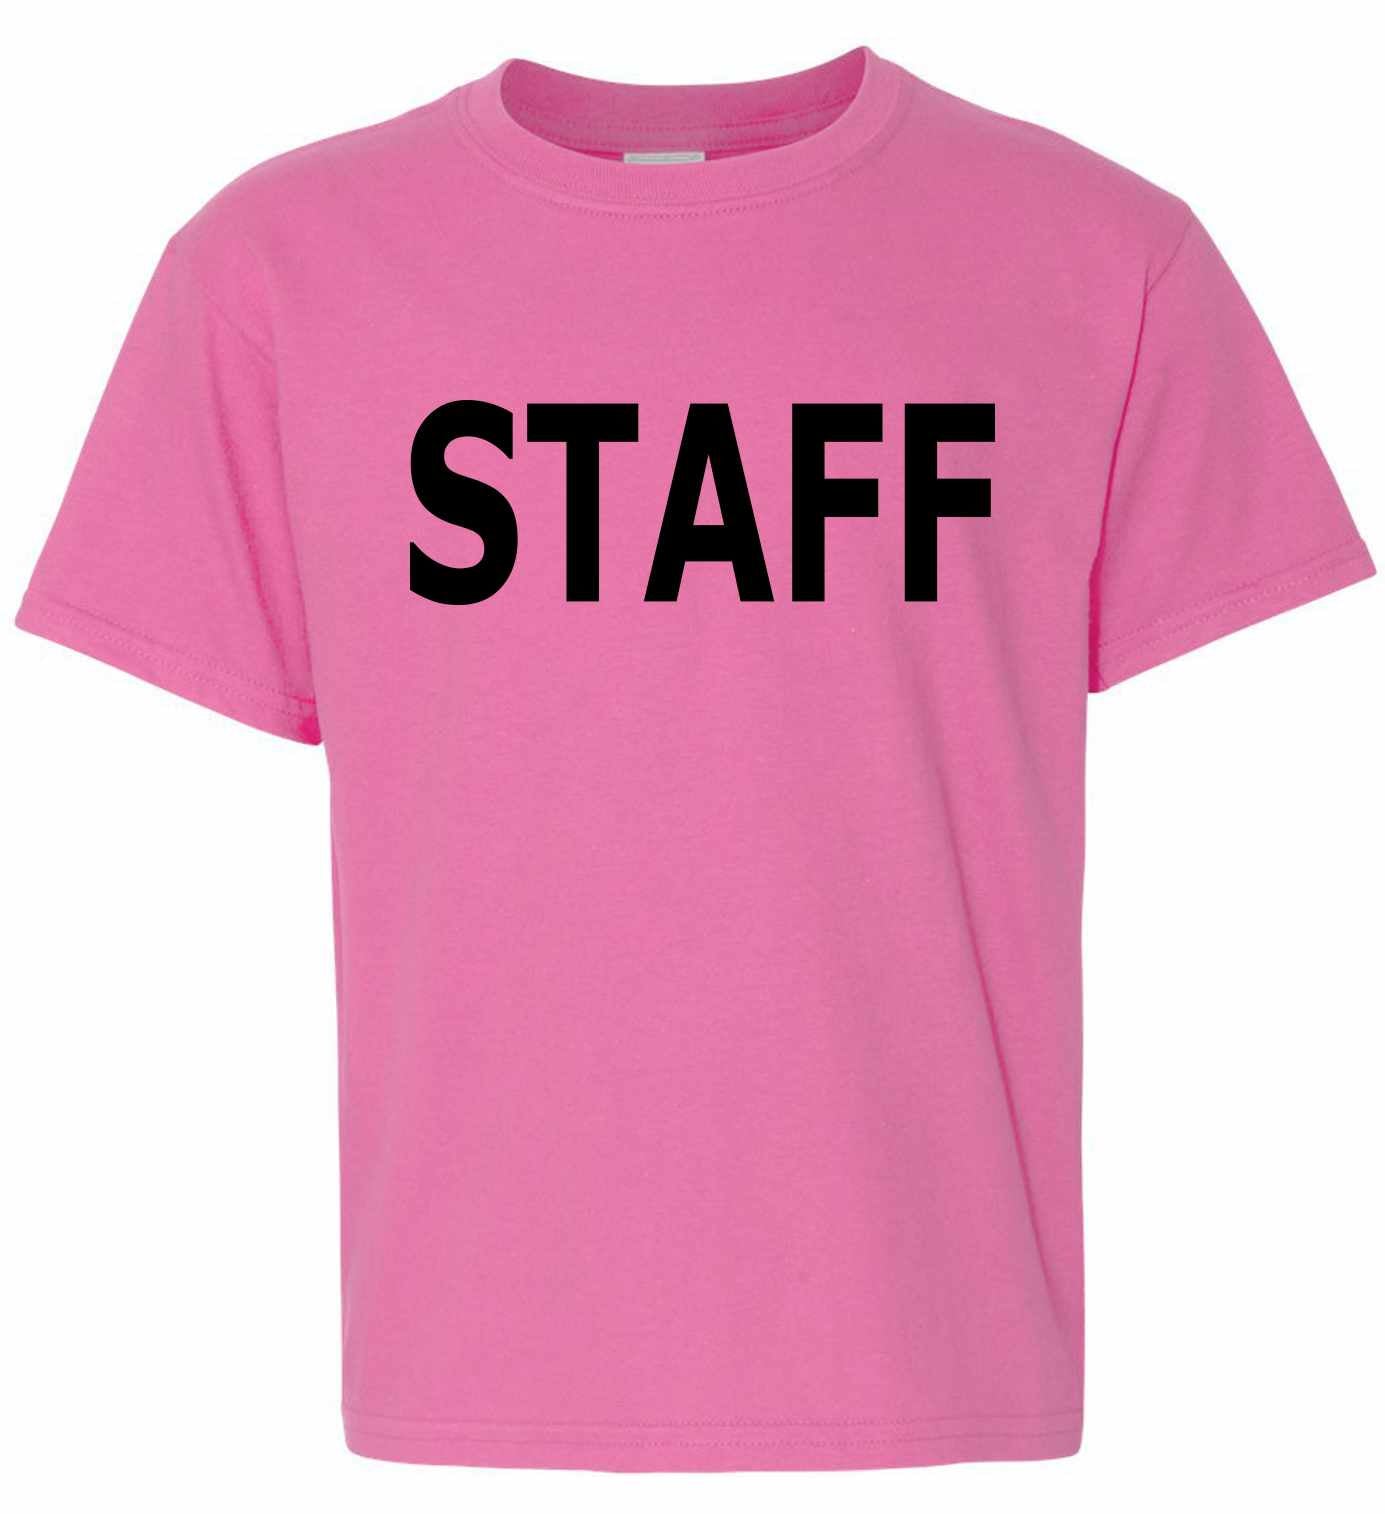 STAFF on Kids T-Shirt